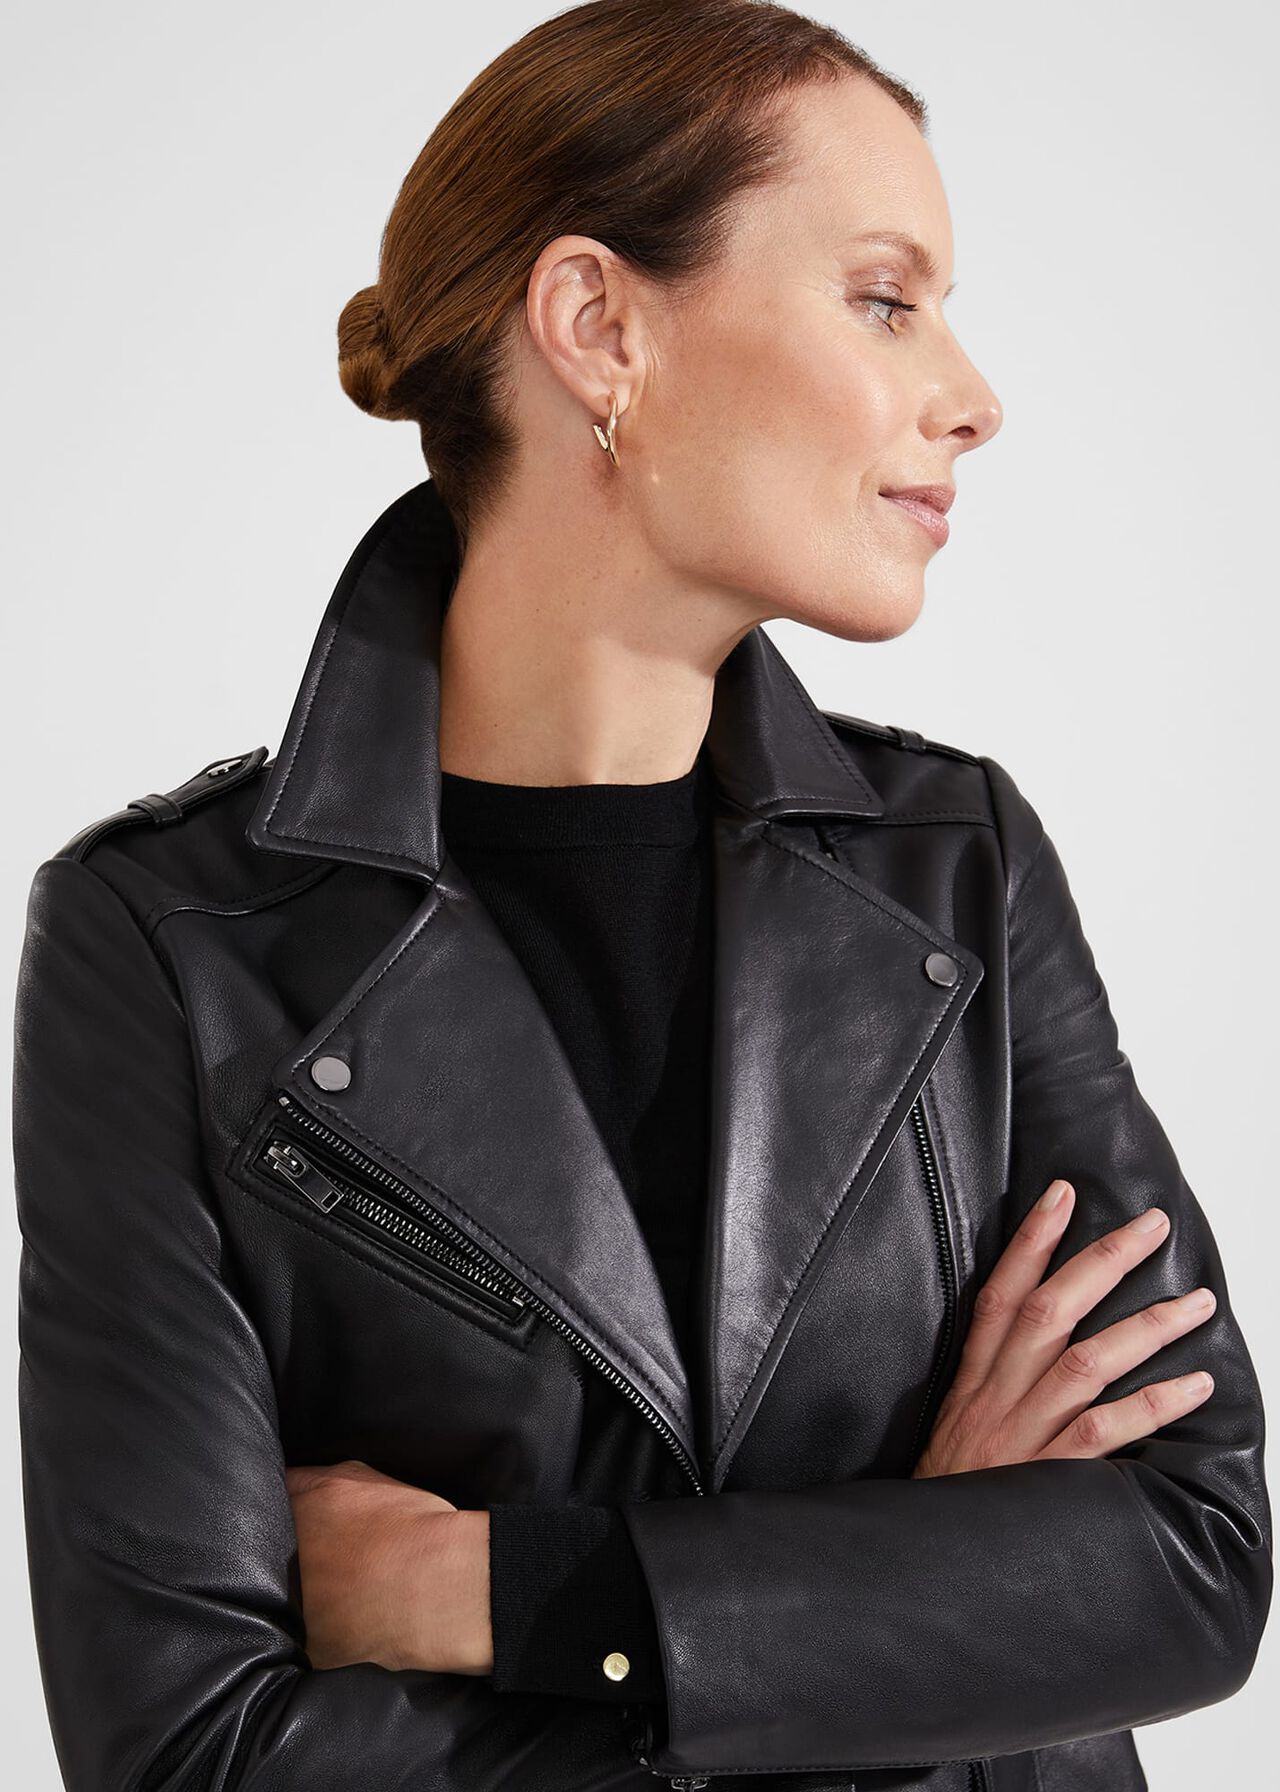 Darby Leather Jacket, Black, hi-res